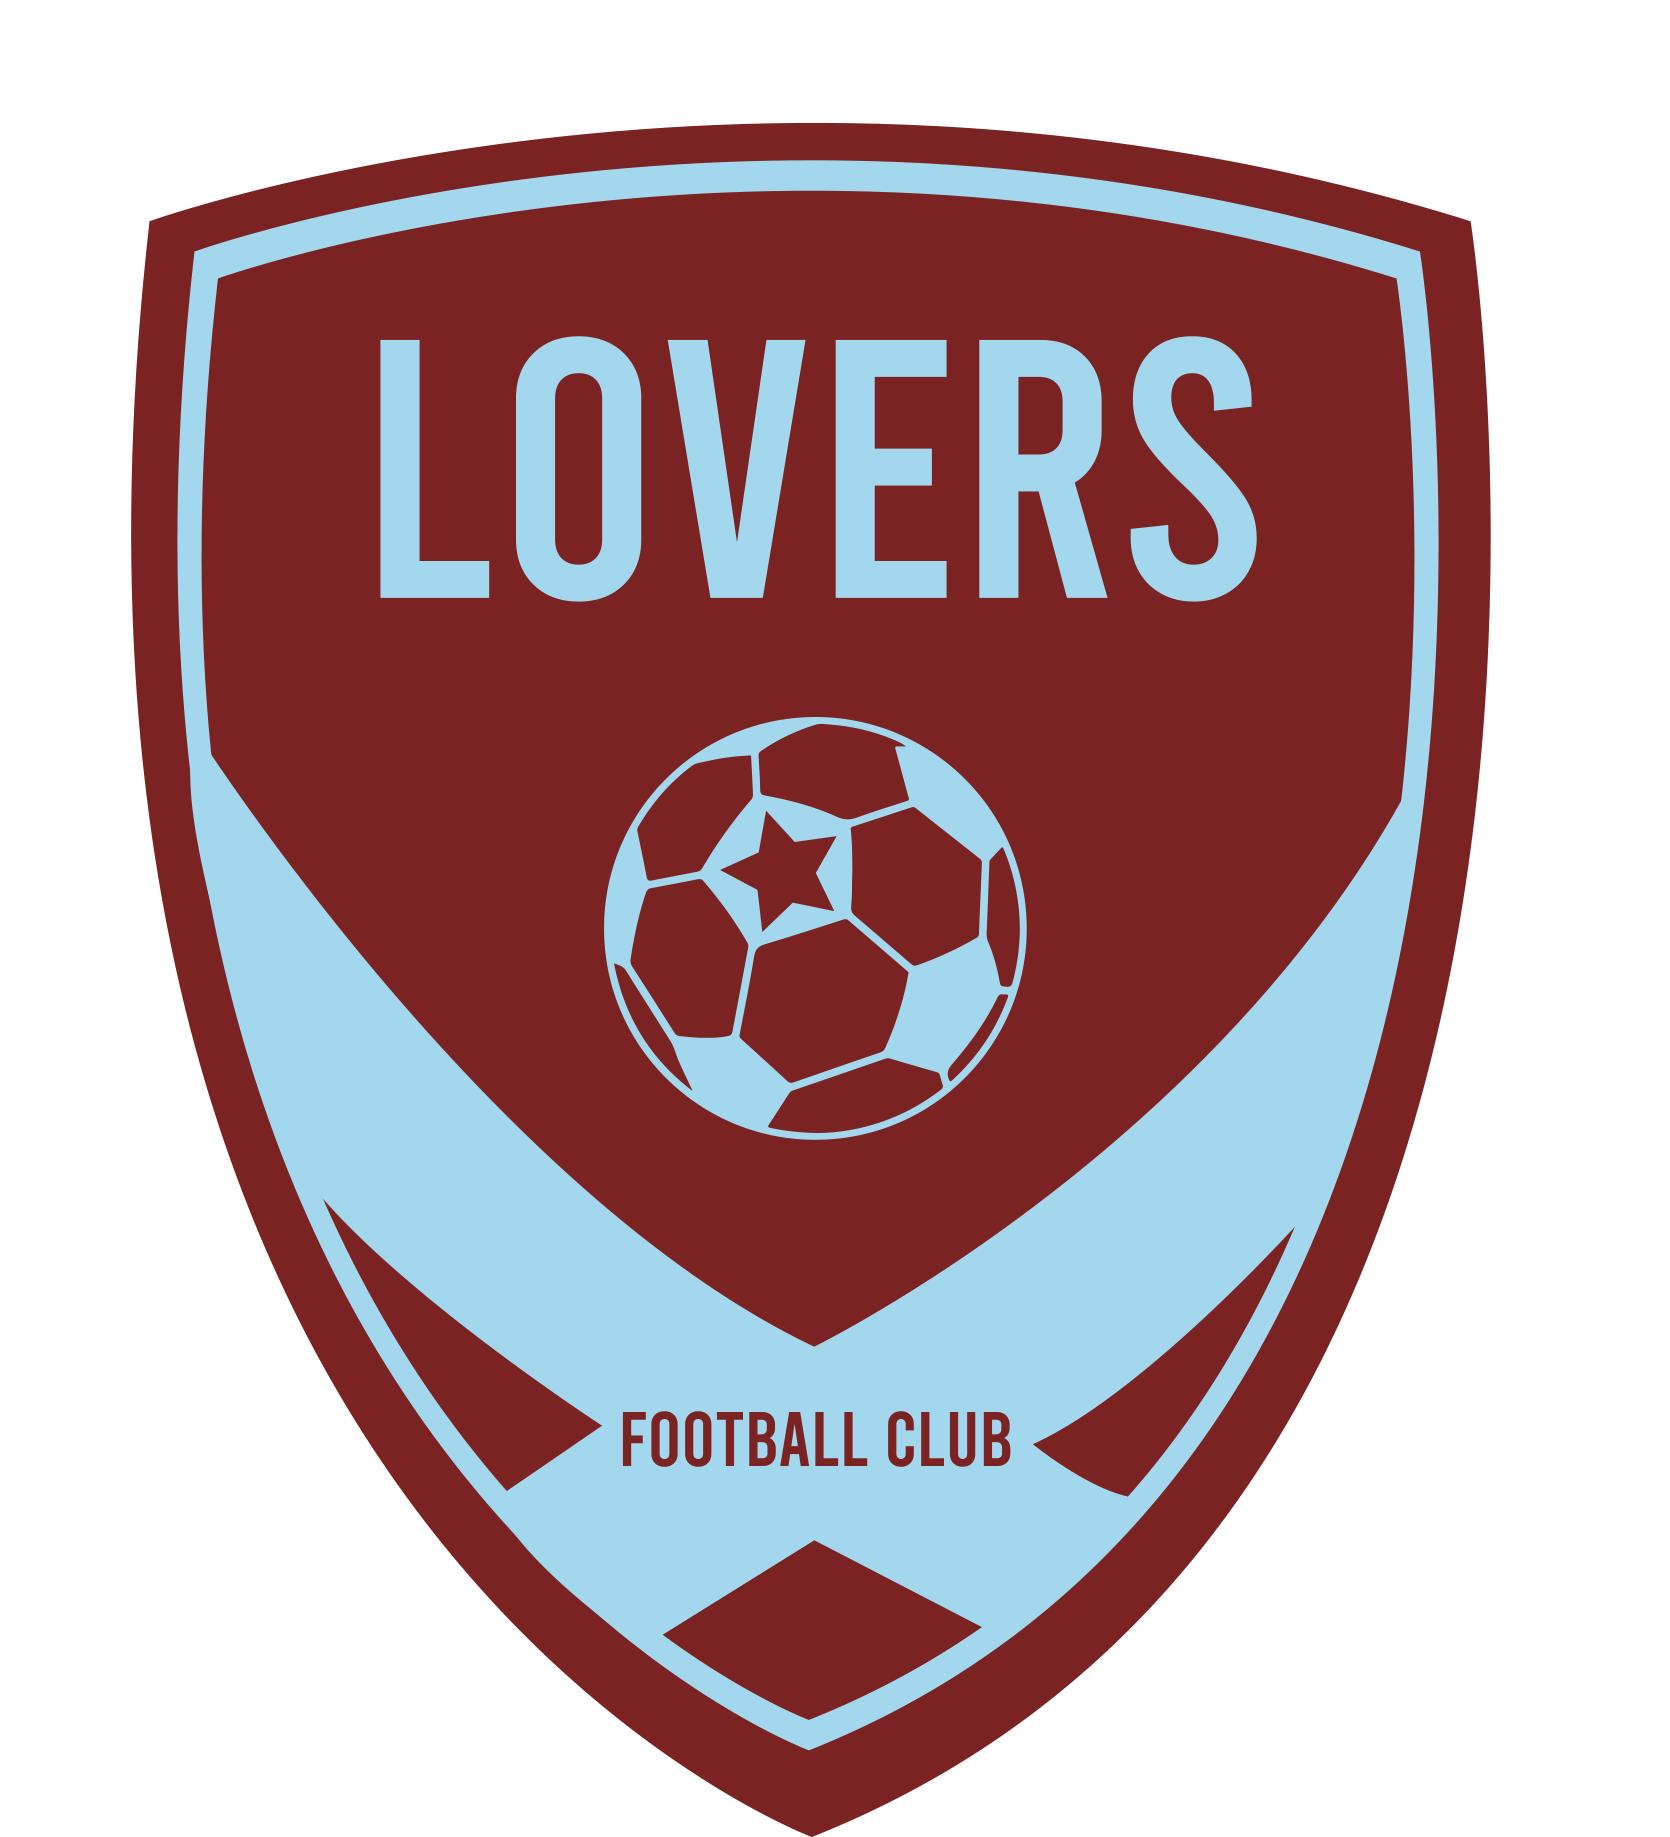 LOVERS FOOTBALL CLUB